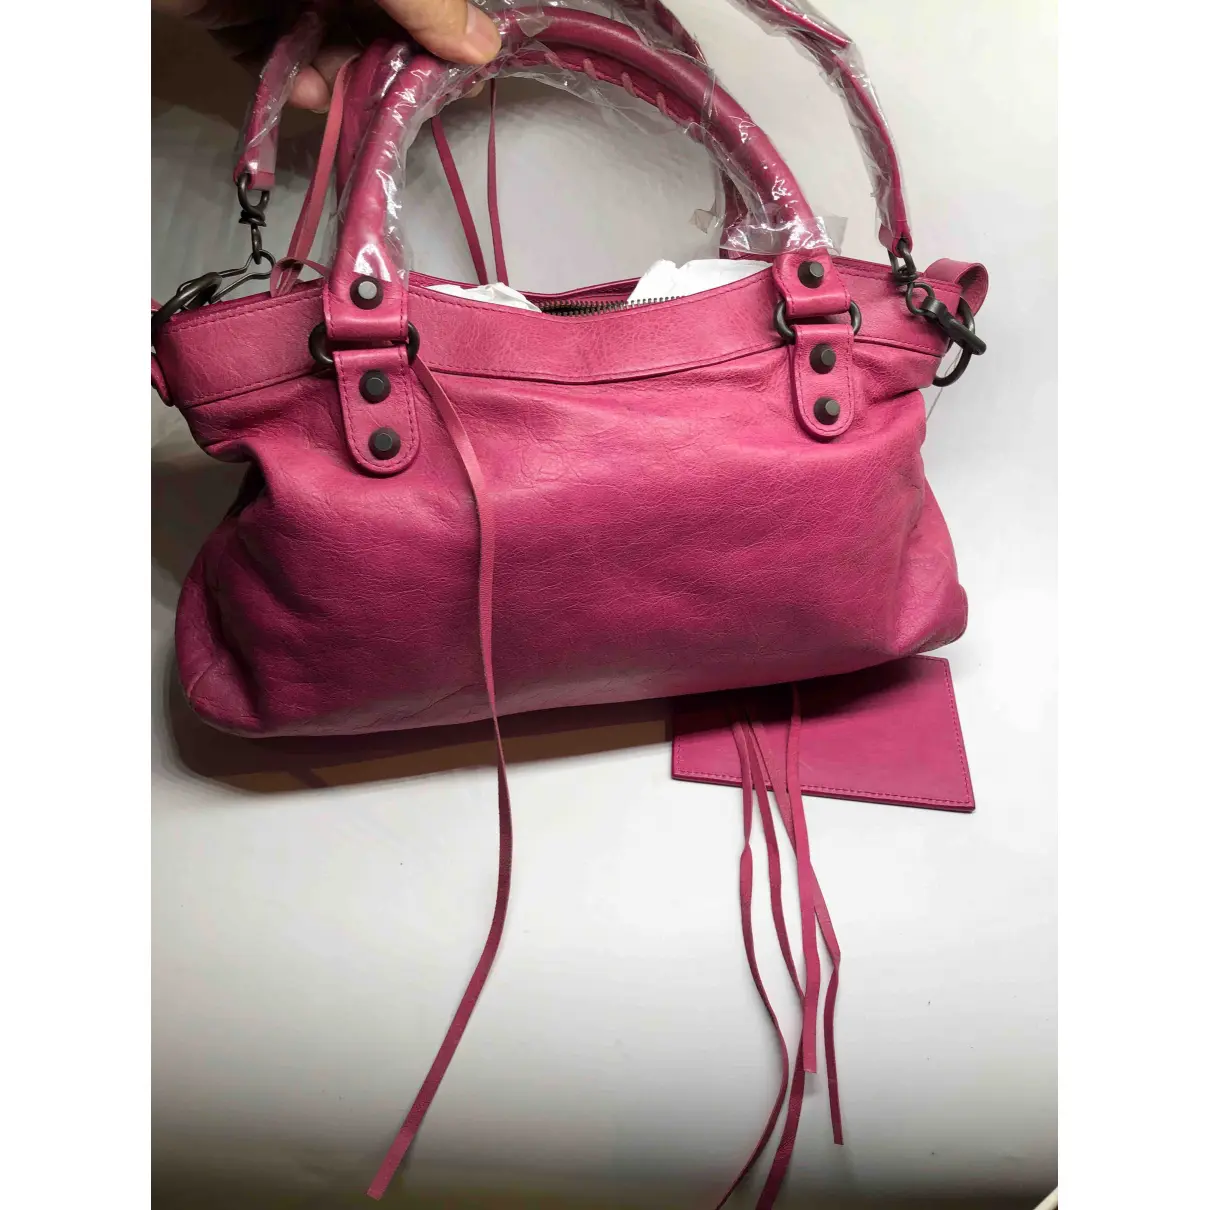 Buy Balenciaga First leather handbag online